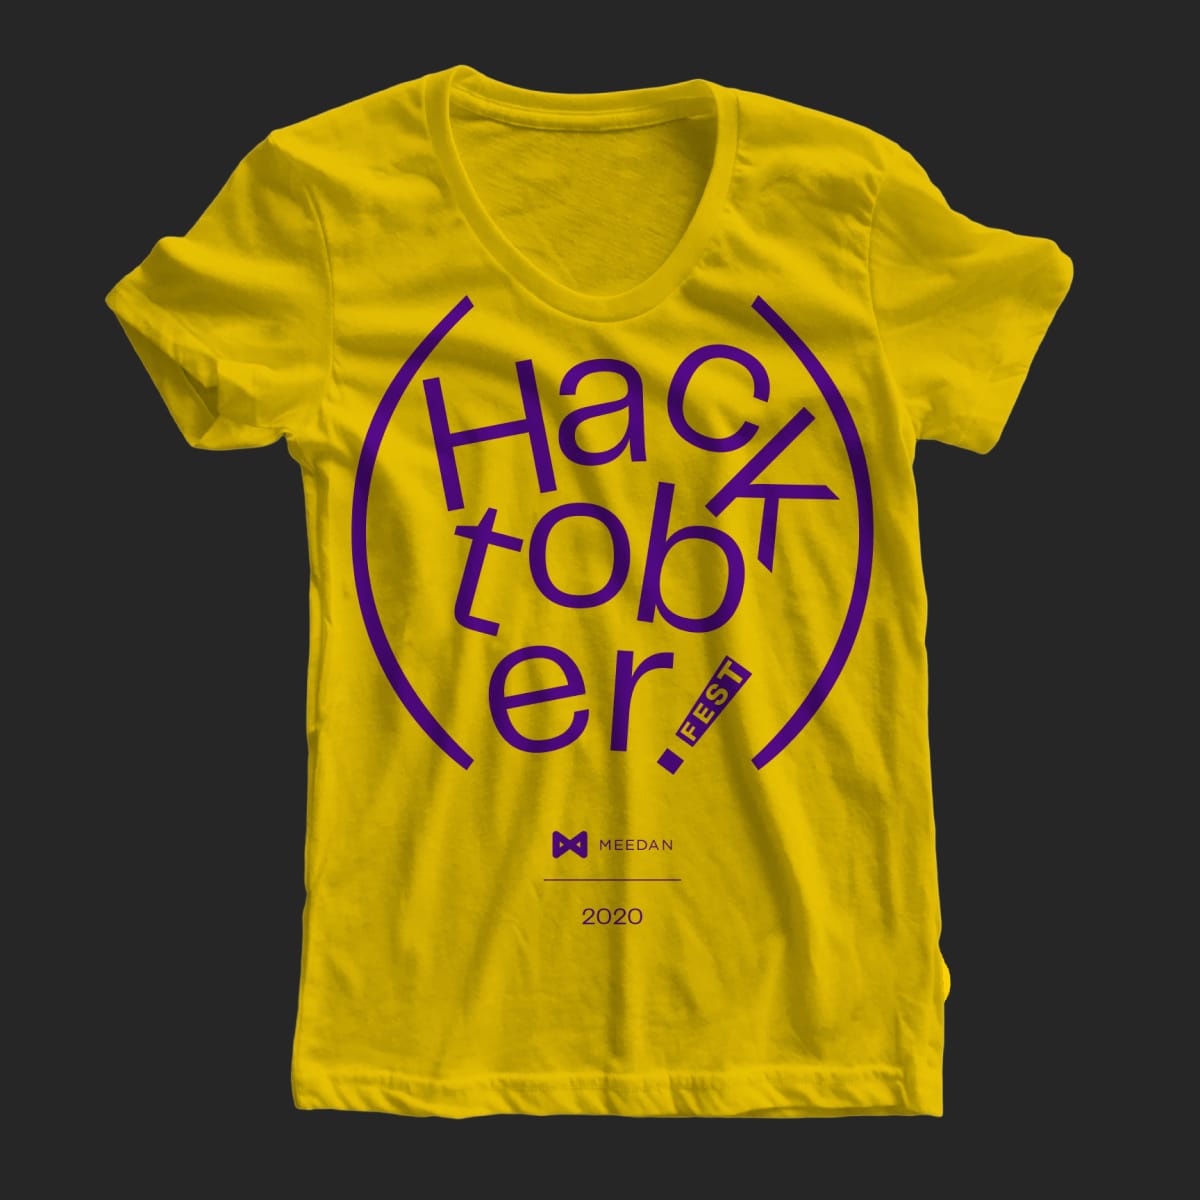 meedan hacktoberfest tshirt 3